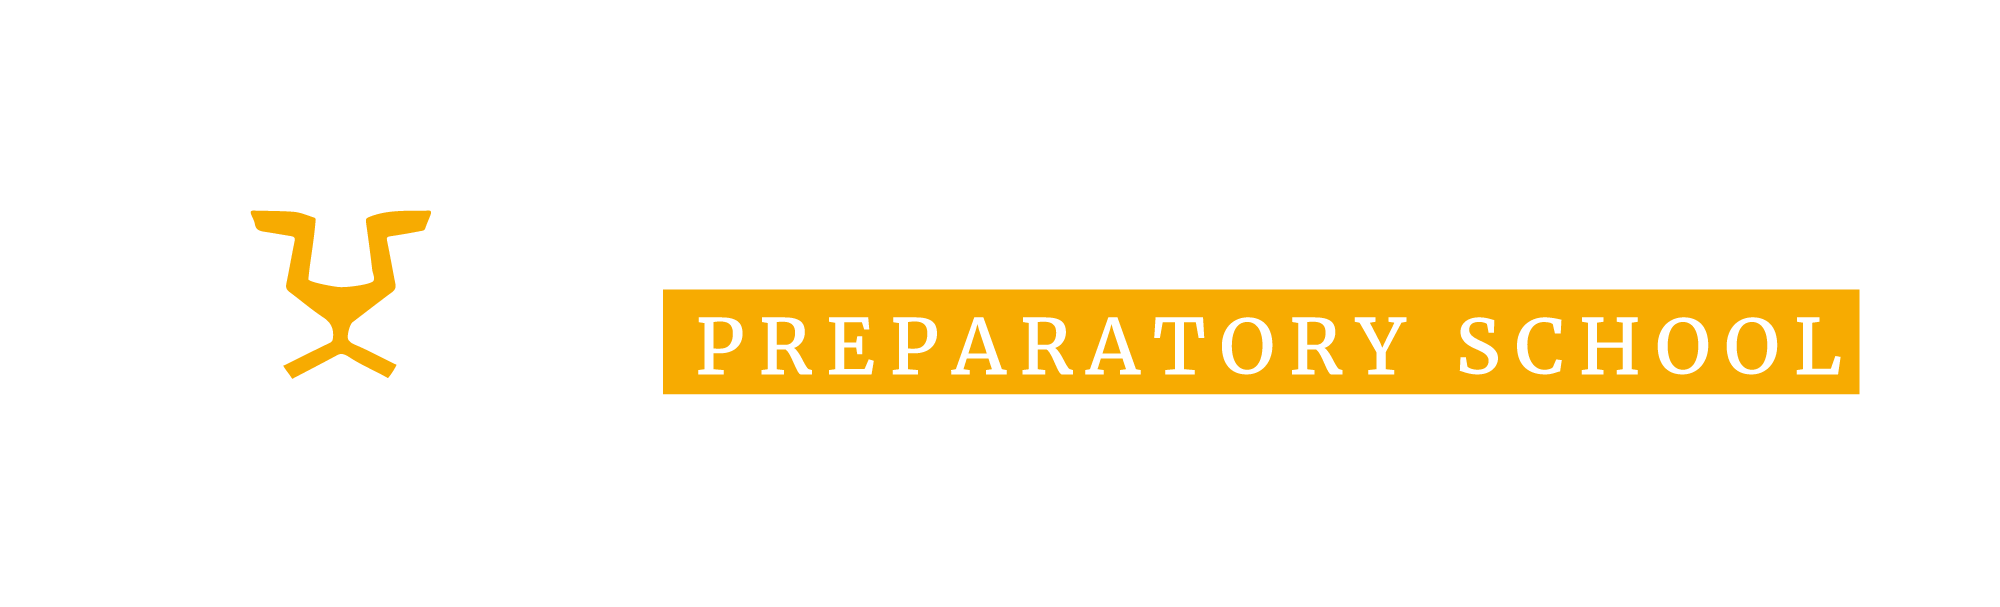 Living Water Christian Preparatory School